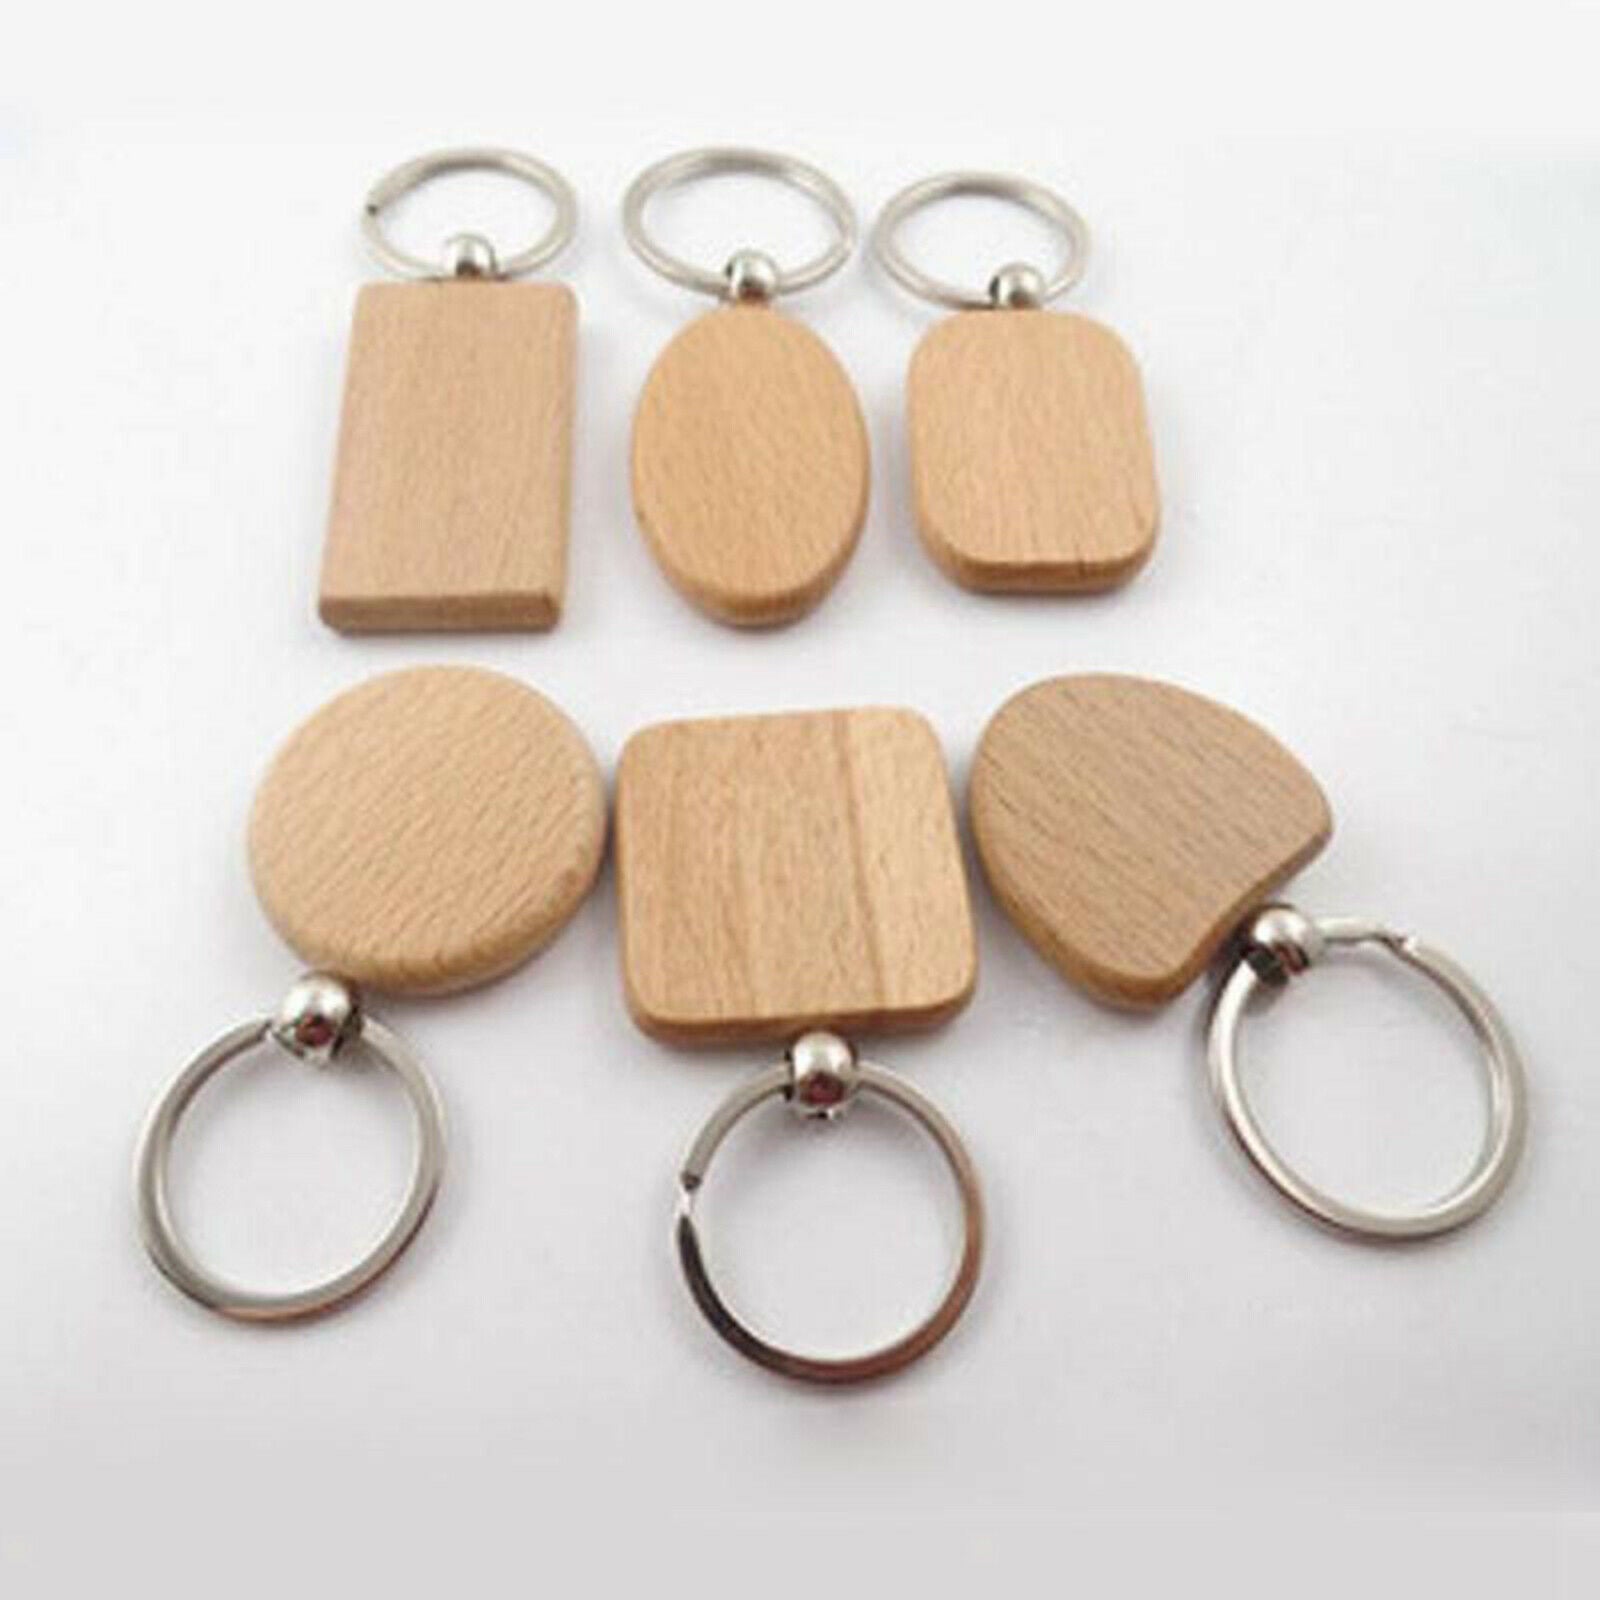 25x Unpainted Empty Plain Wood Key Chain Keychain Keyfob Bag